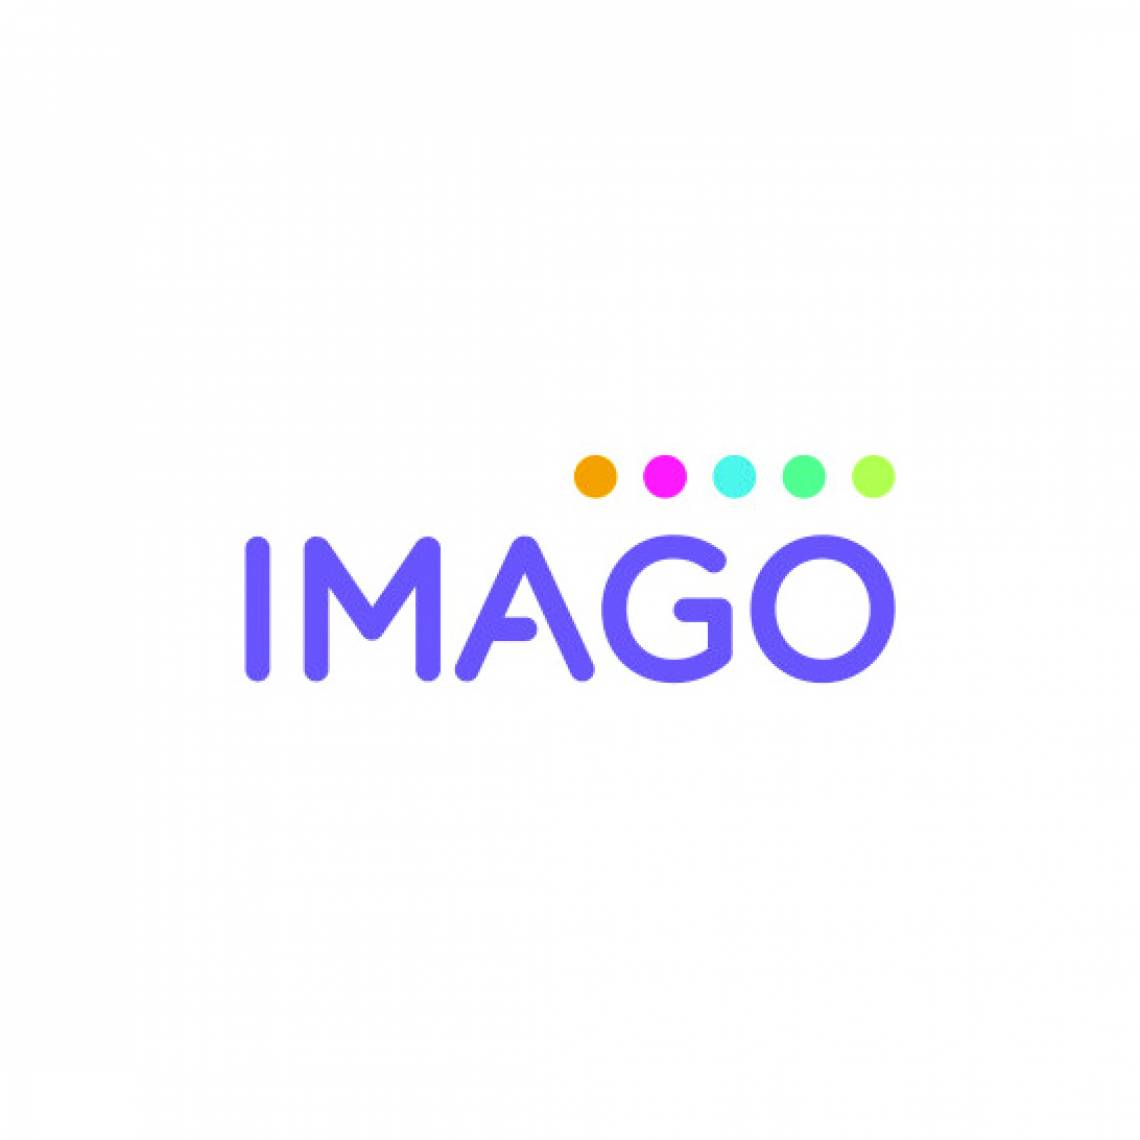 Imago logo